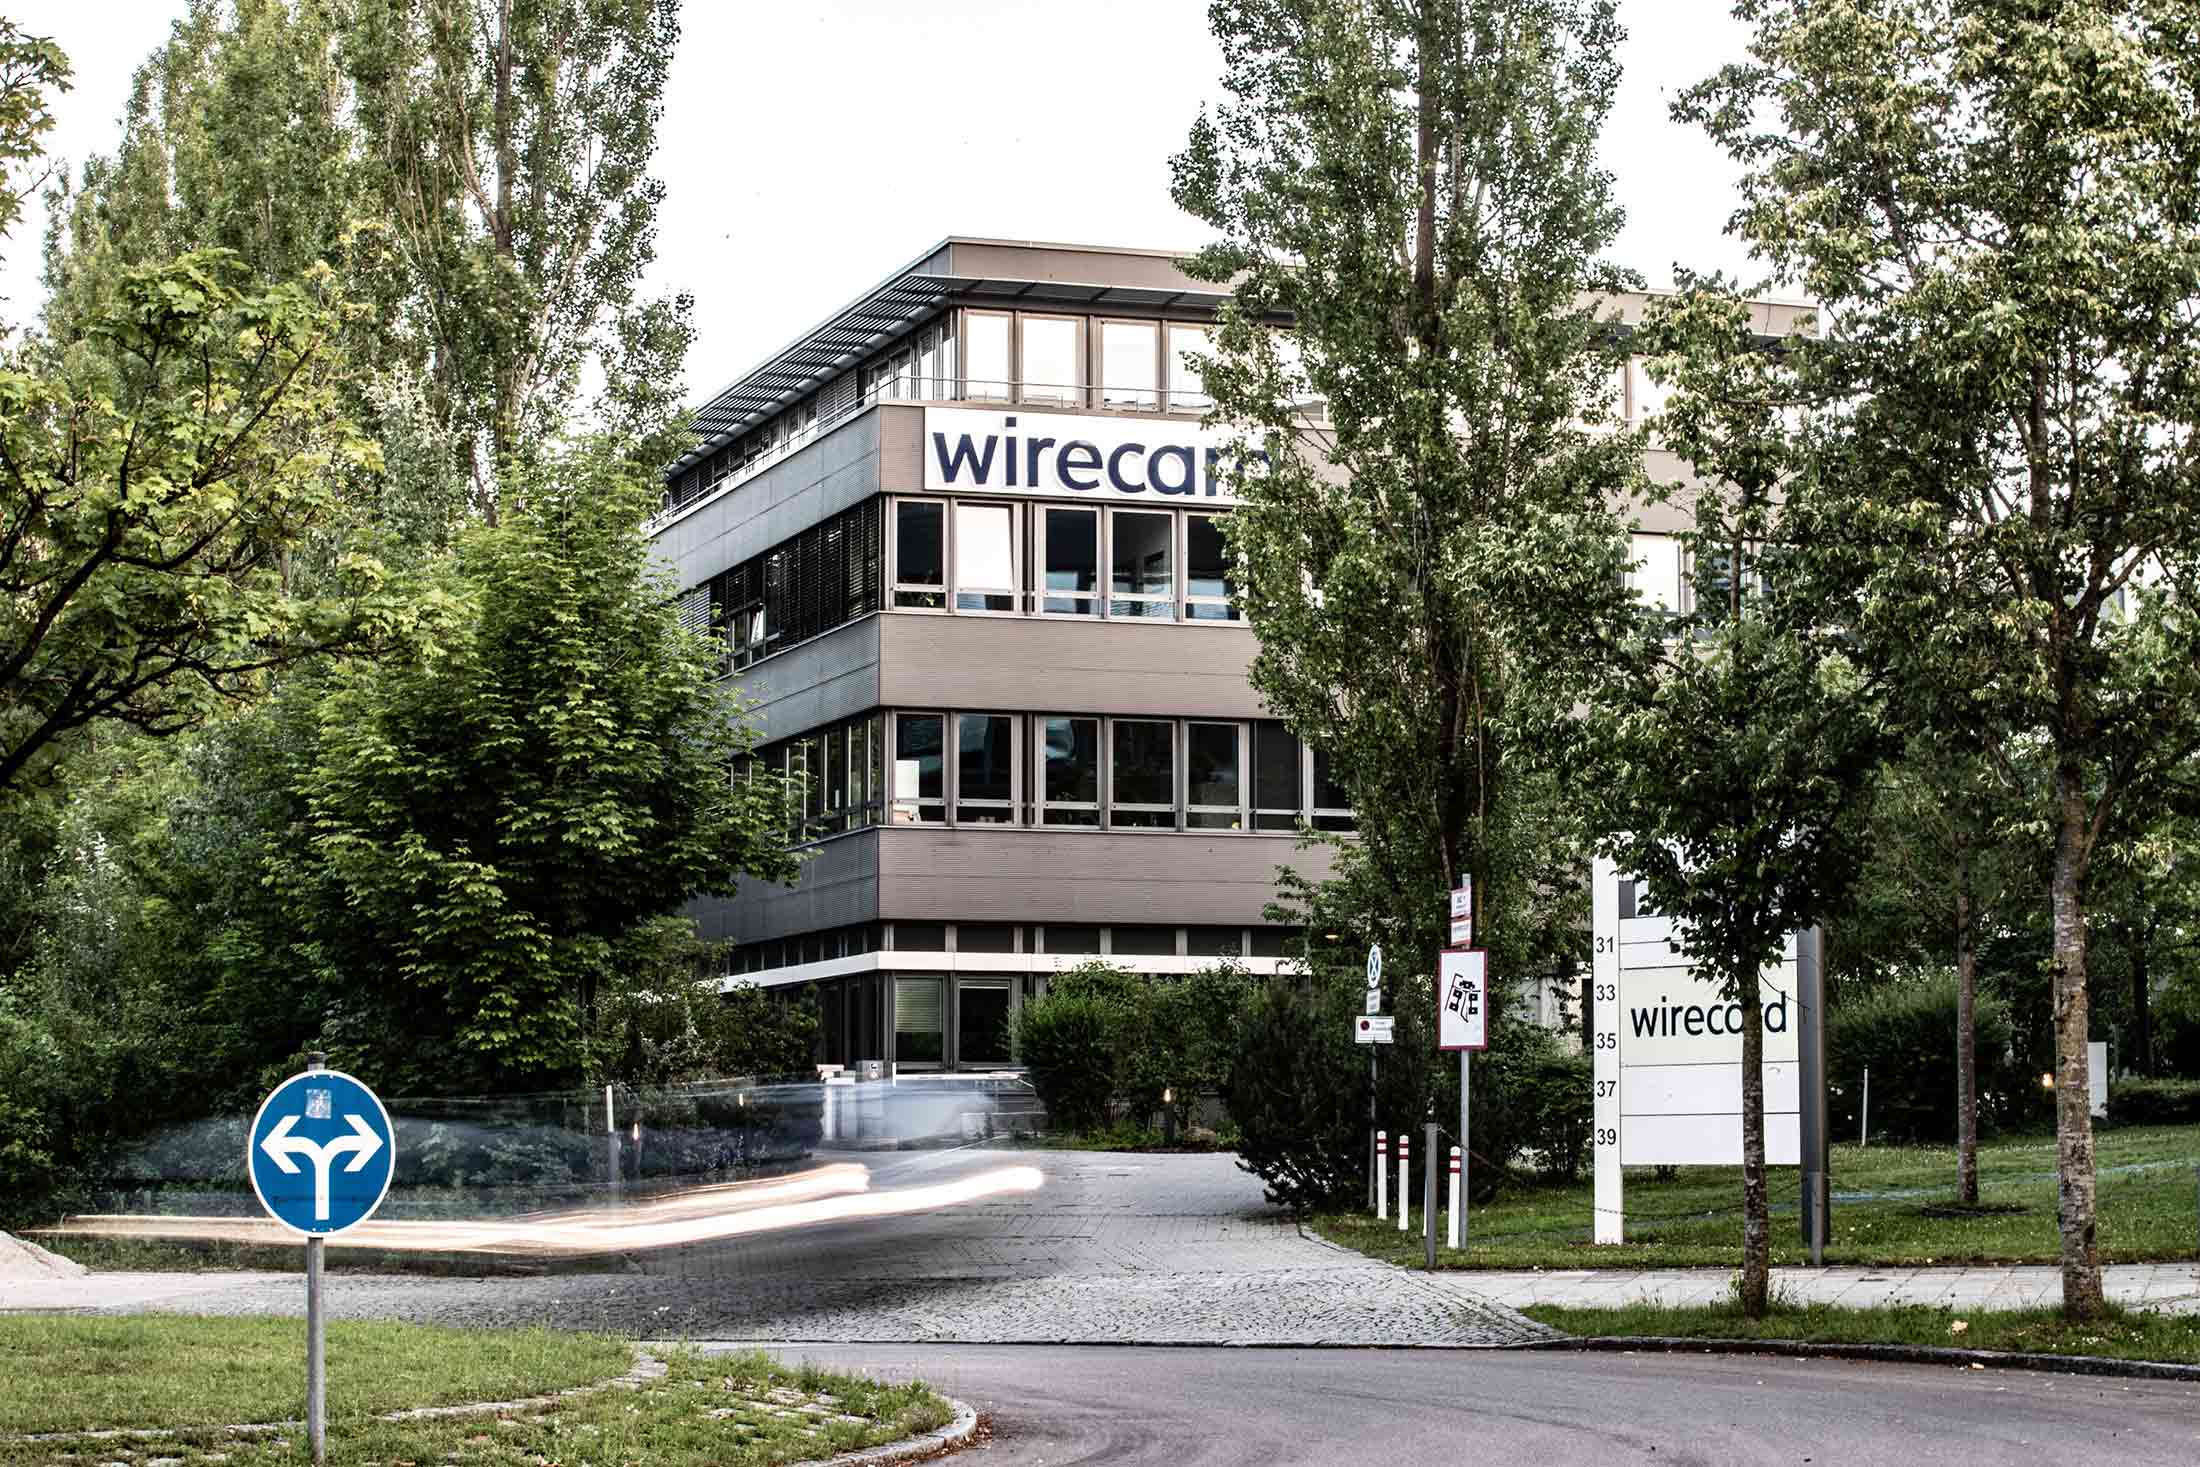 Wirecard’s headquarters.